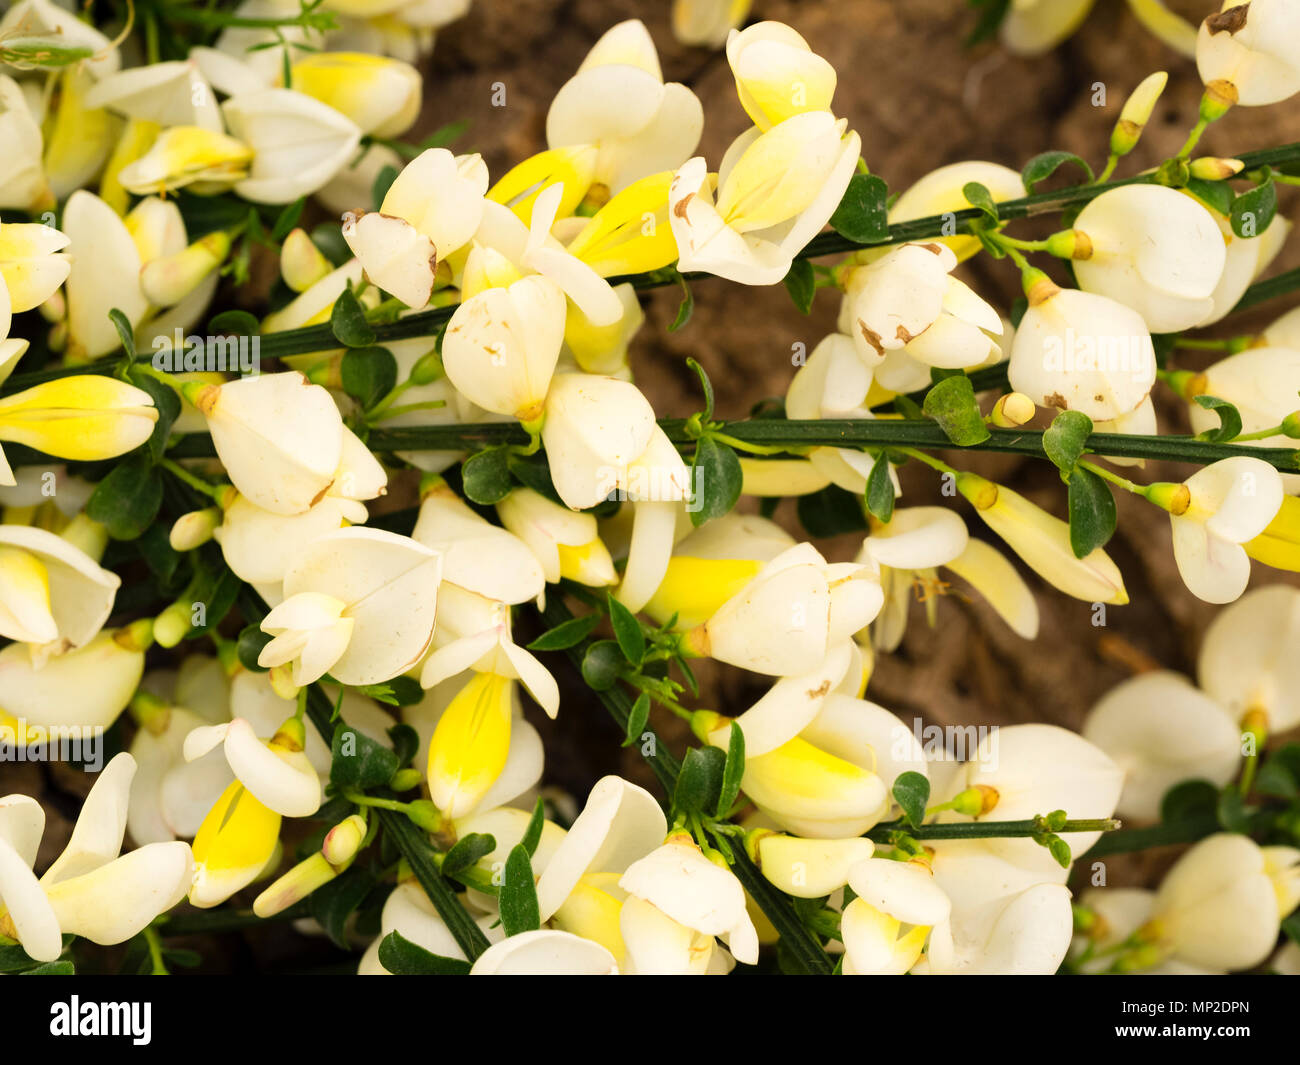 Cream and white flowers of the ornamental form of the evergreen, shrubby broom, Cytisus scoparius 'Cornish Cream' Stock Photo